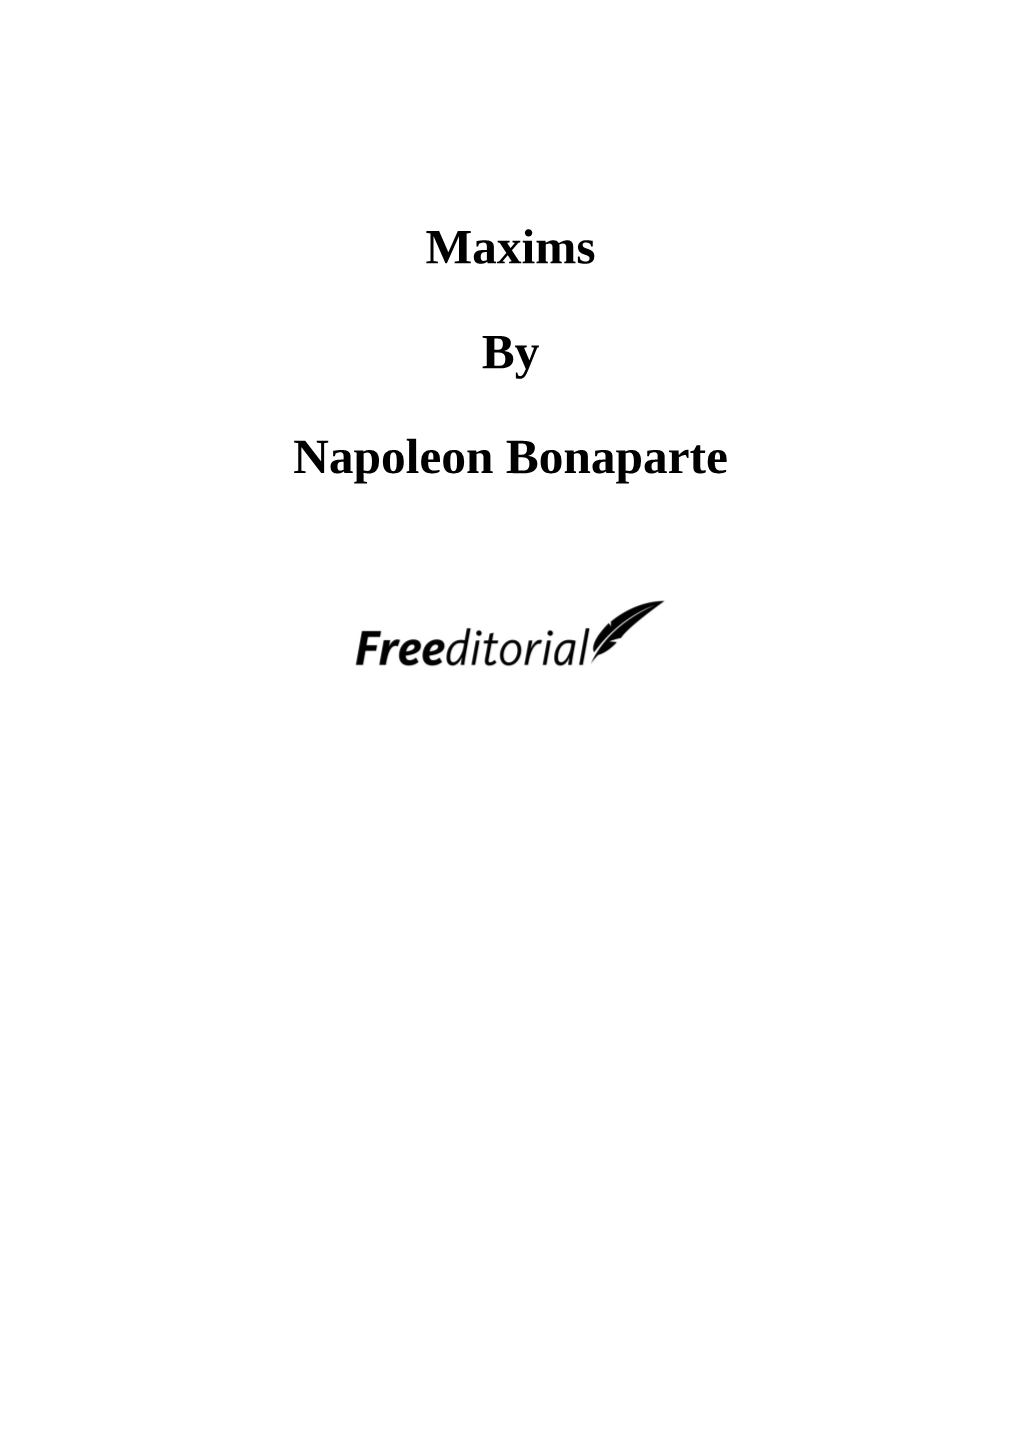 Maxims by Napoleon Bonaparte